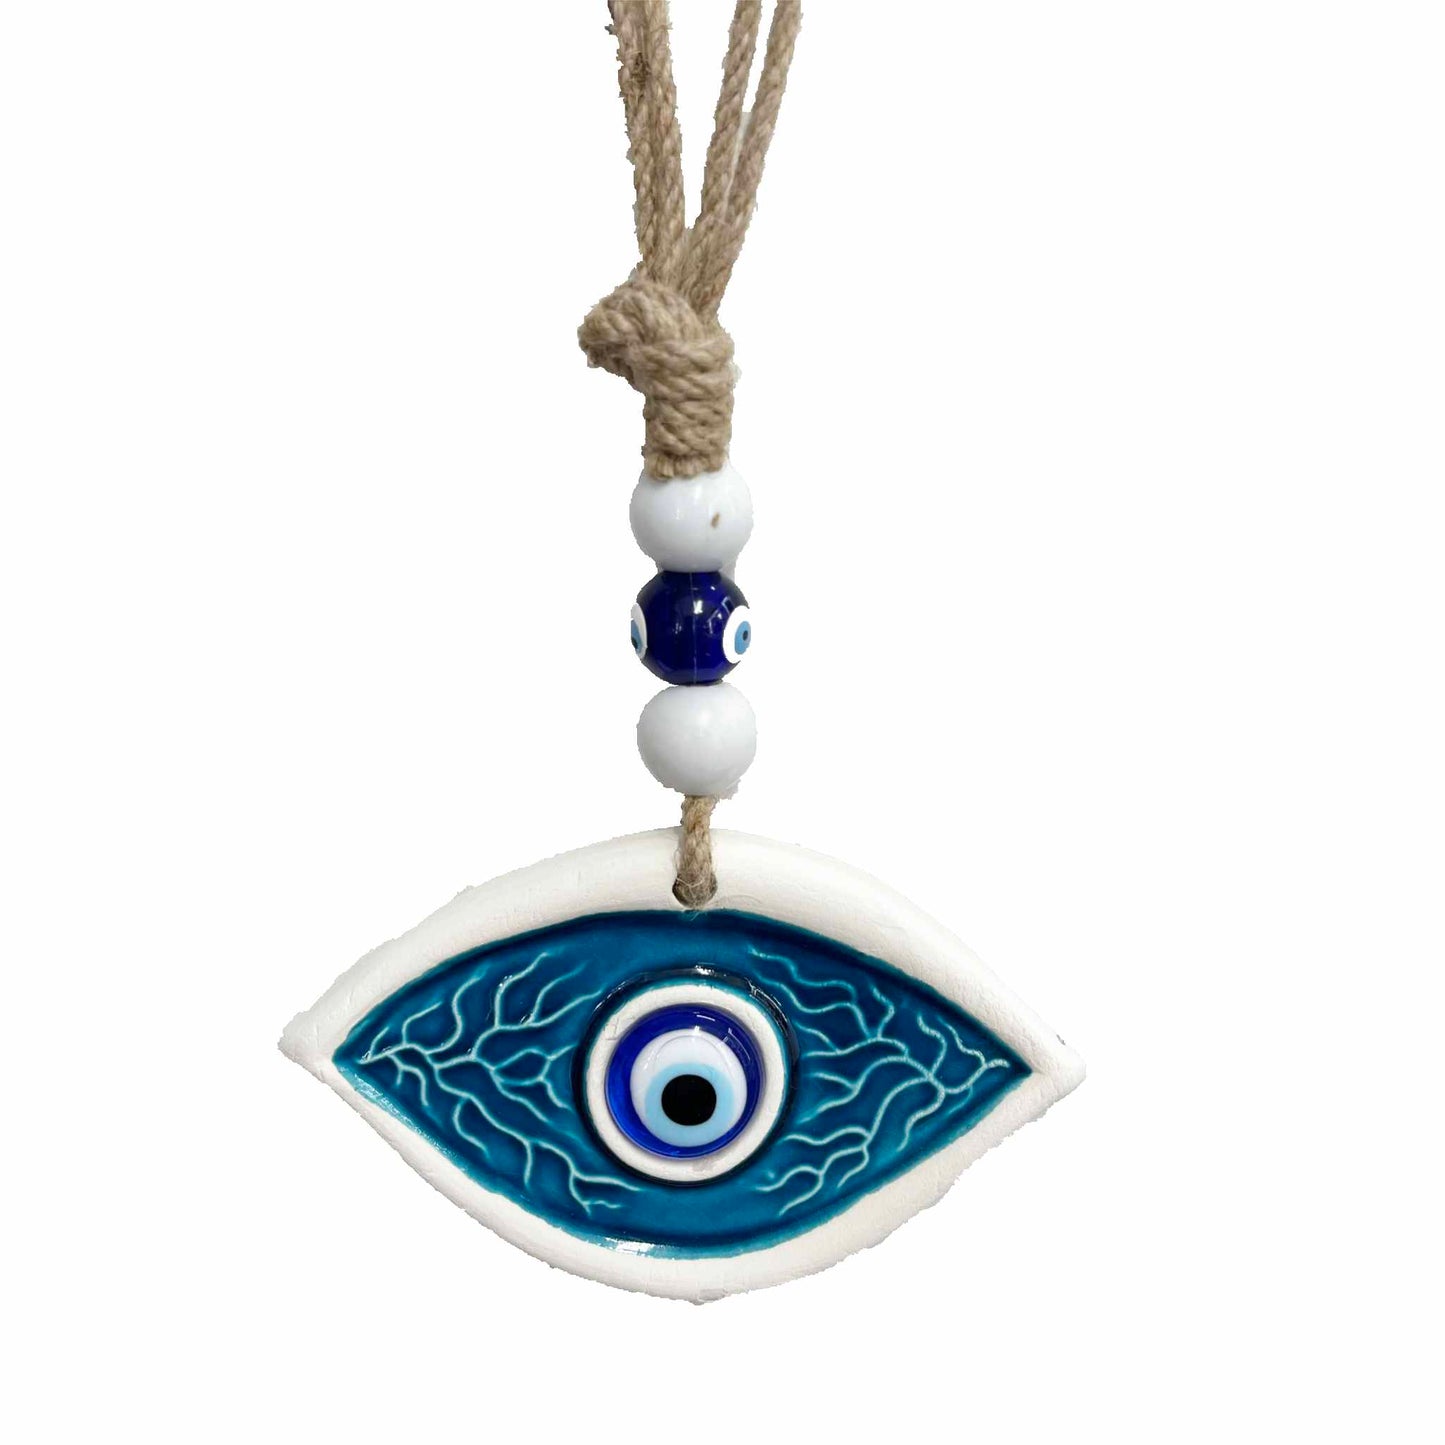 Amuleto ojo turco de pared en azul y blanco.